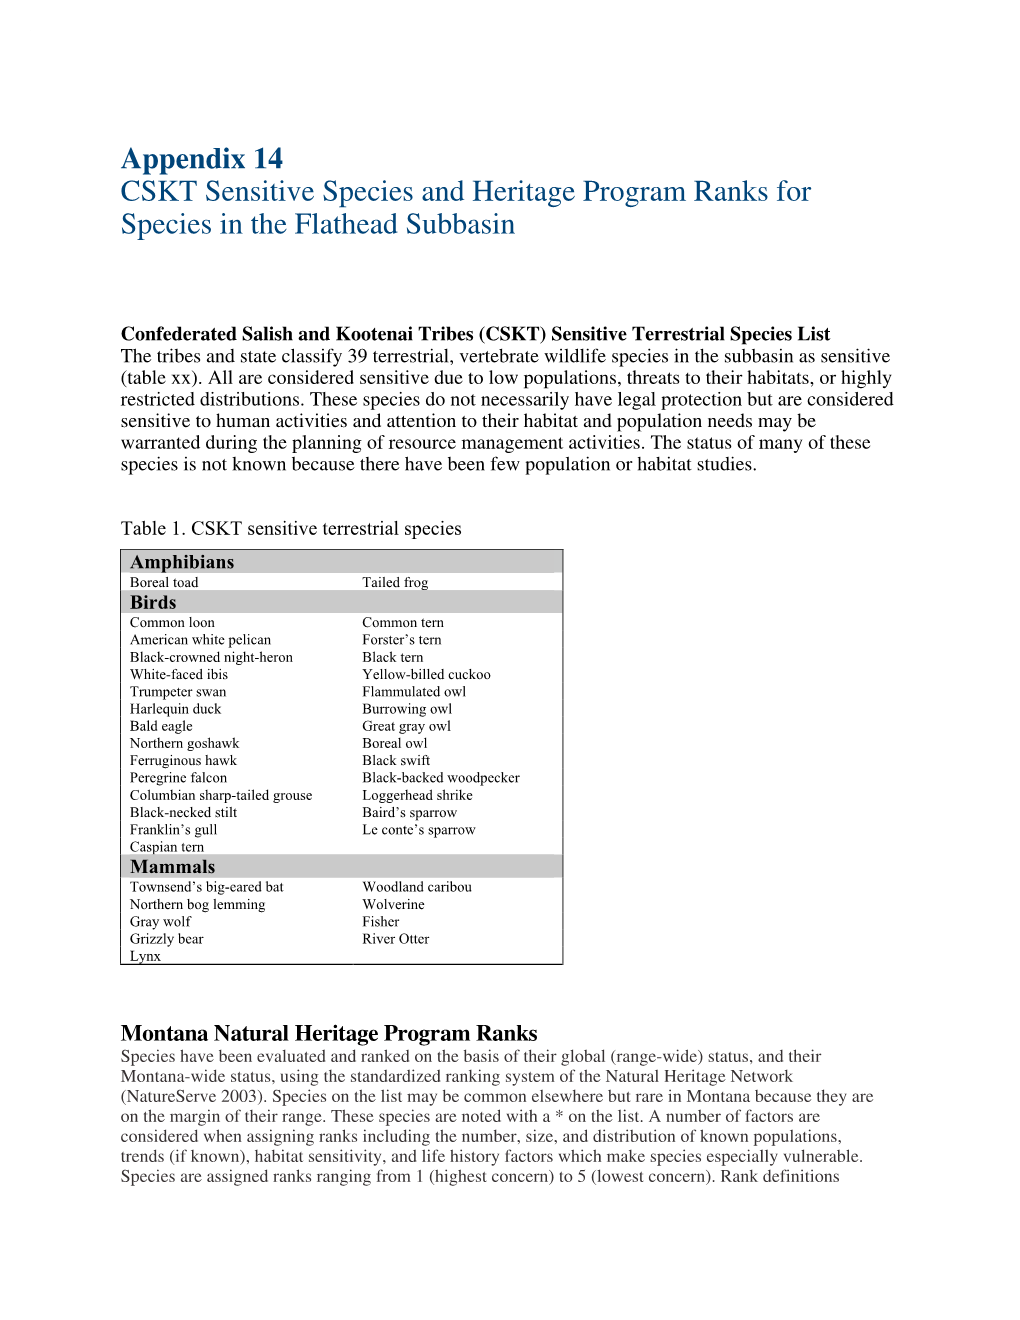 Appendix 14 CSKT Sensitive Species and Heritage Program Ranks for Species in the Flathead Subbasin